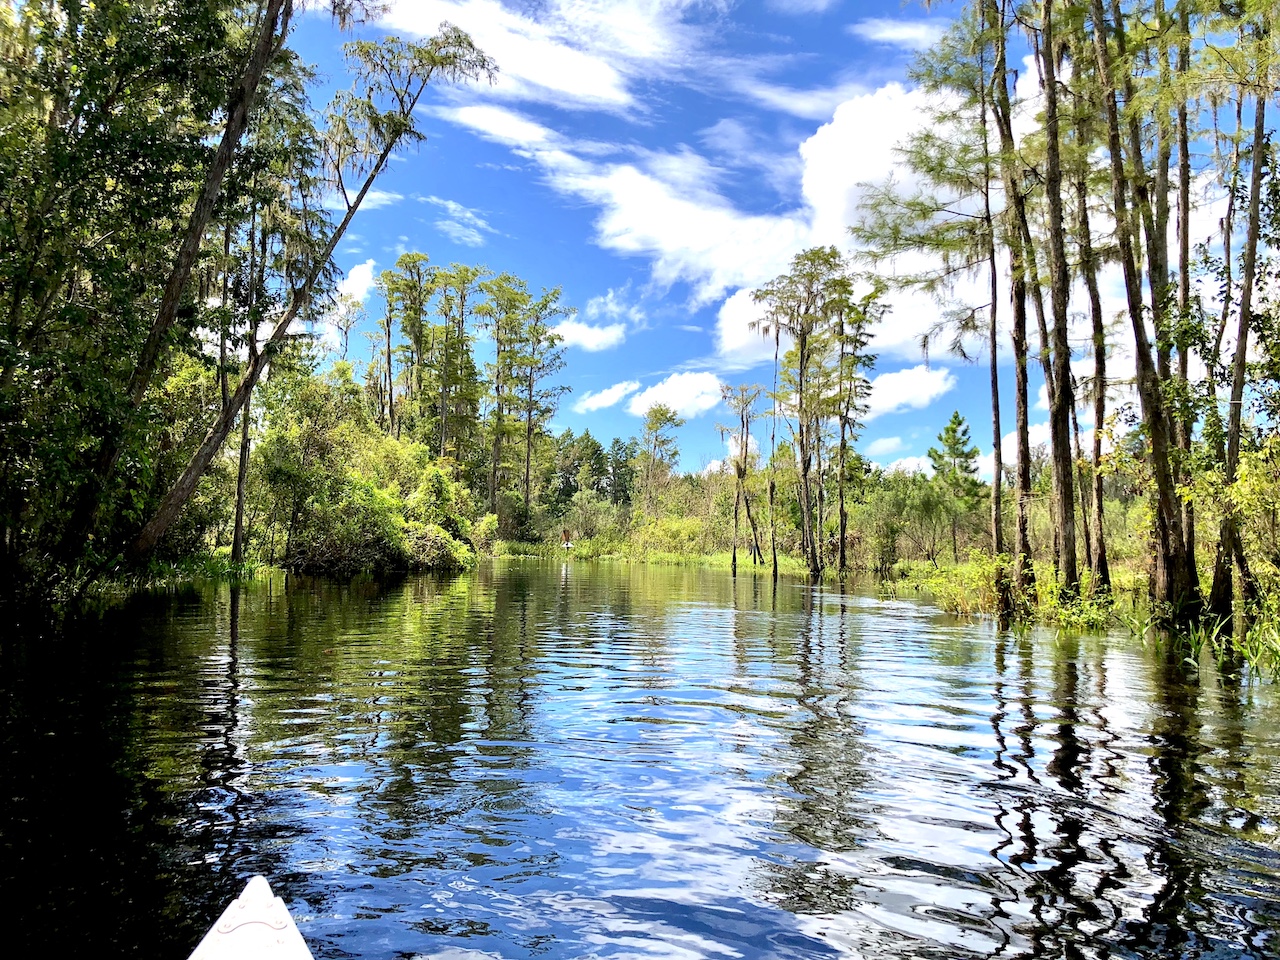 Canoeing in Orlando at Shingle Creek Regional Park #Orlando #Orlandowithkids #CanoeingOrlando #VisitOrlando #VisitKissimmee #OrlandowithKids #NatureOrlando #FamilyTravel